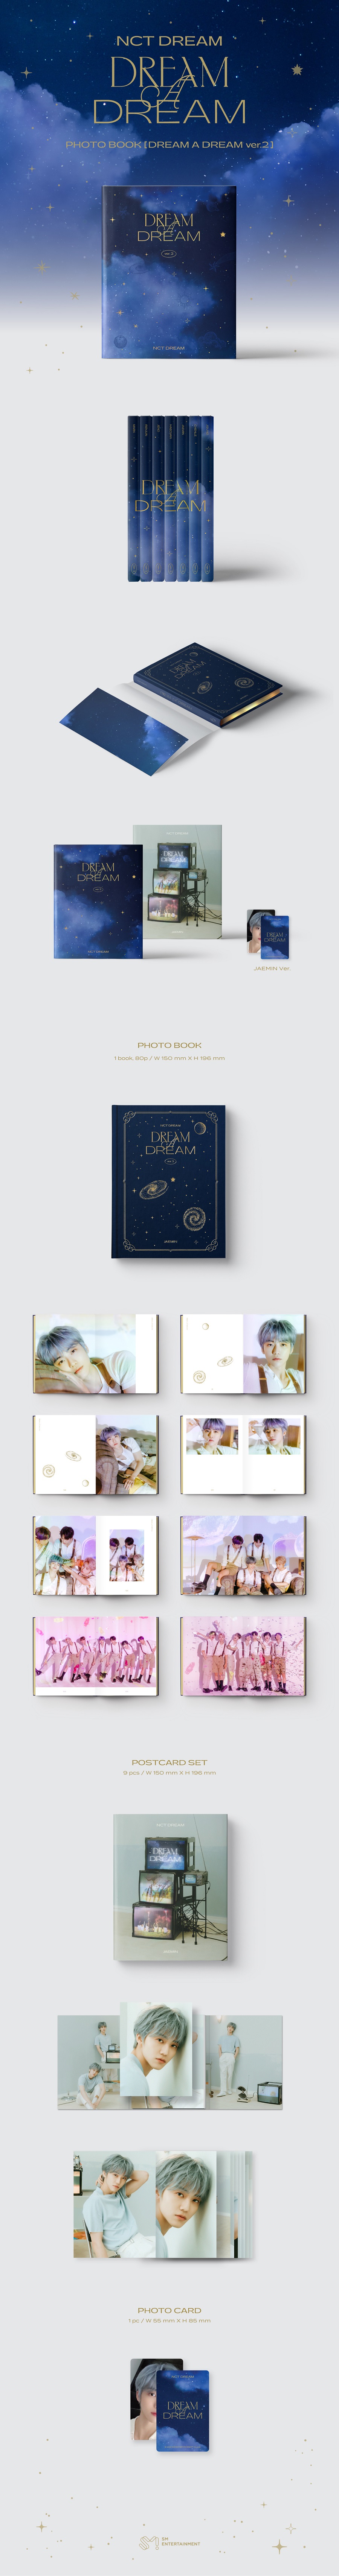 NCT DREAM - DREAM A DREAM Photobook Ver.2 [재민 Ver.]